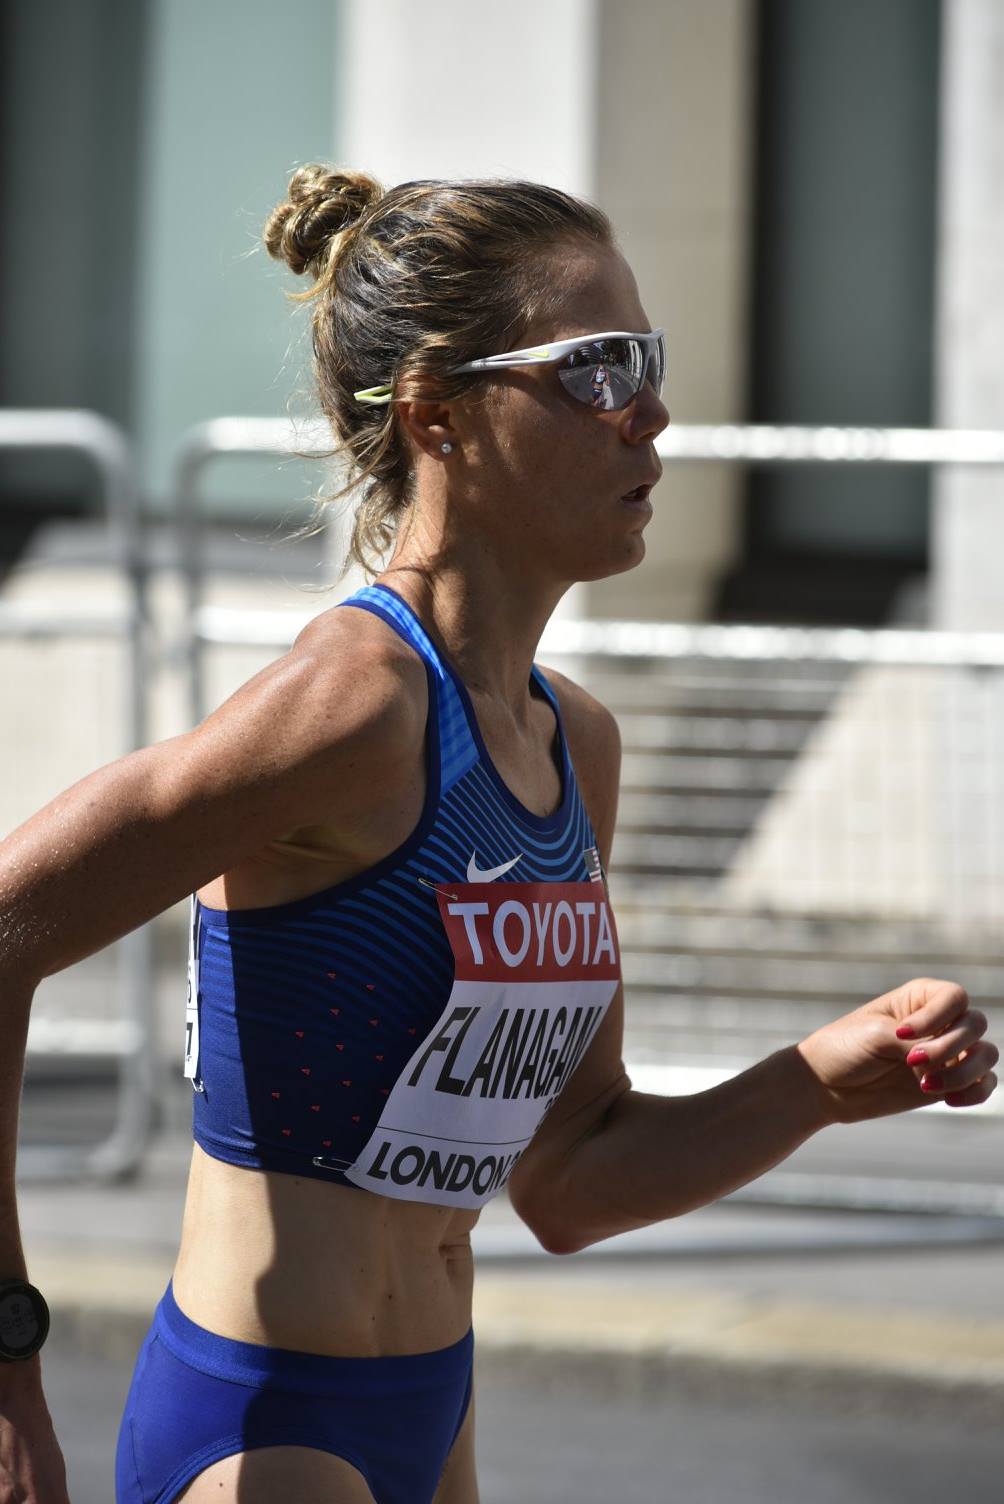 UW alum Lindsay Flanagan 17th at London Marathon